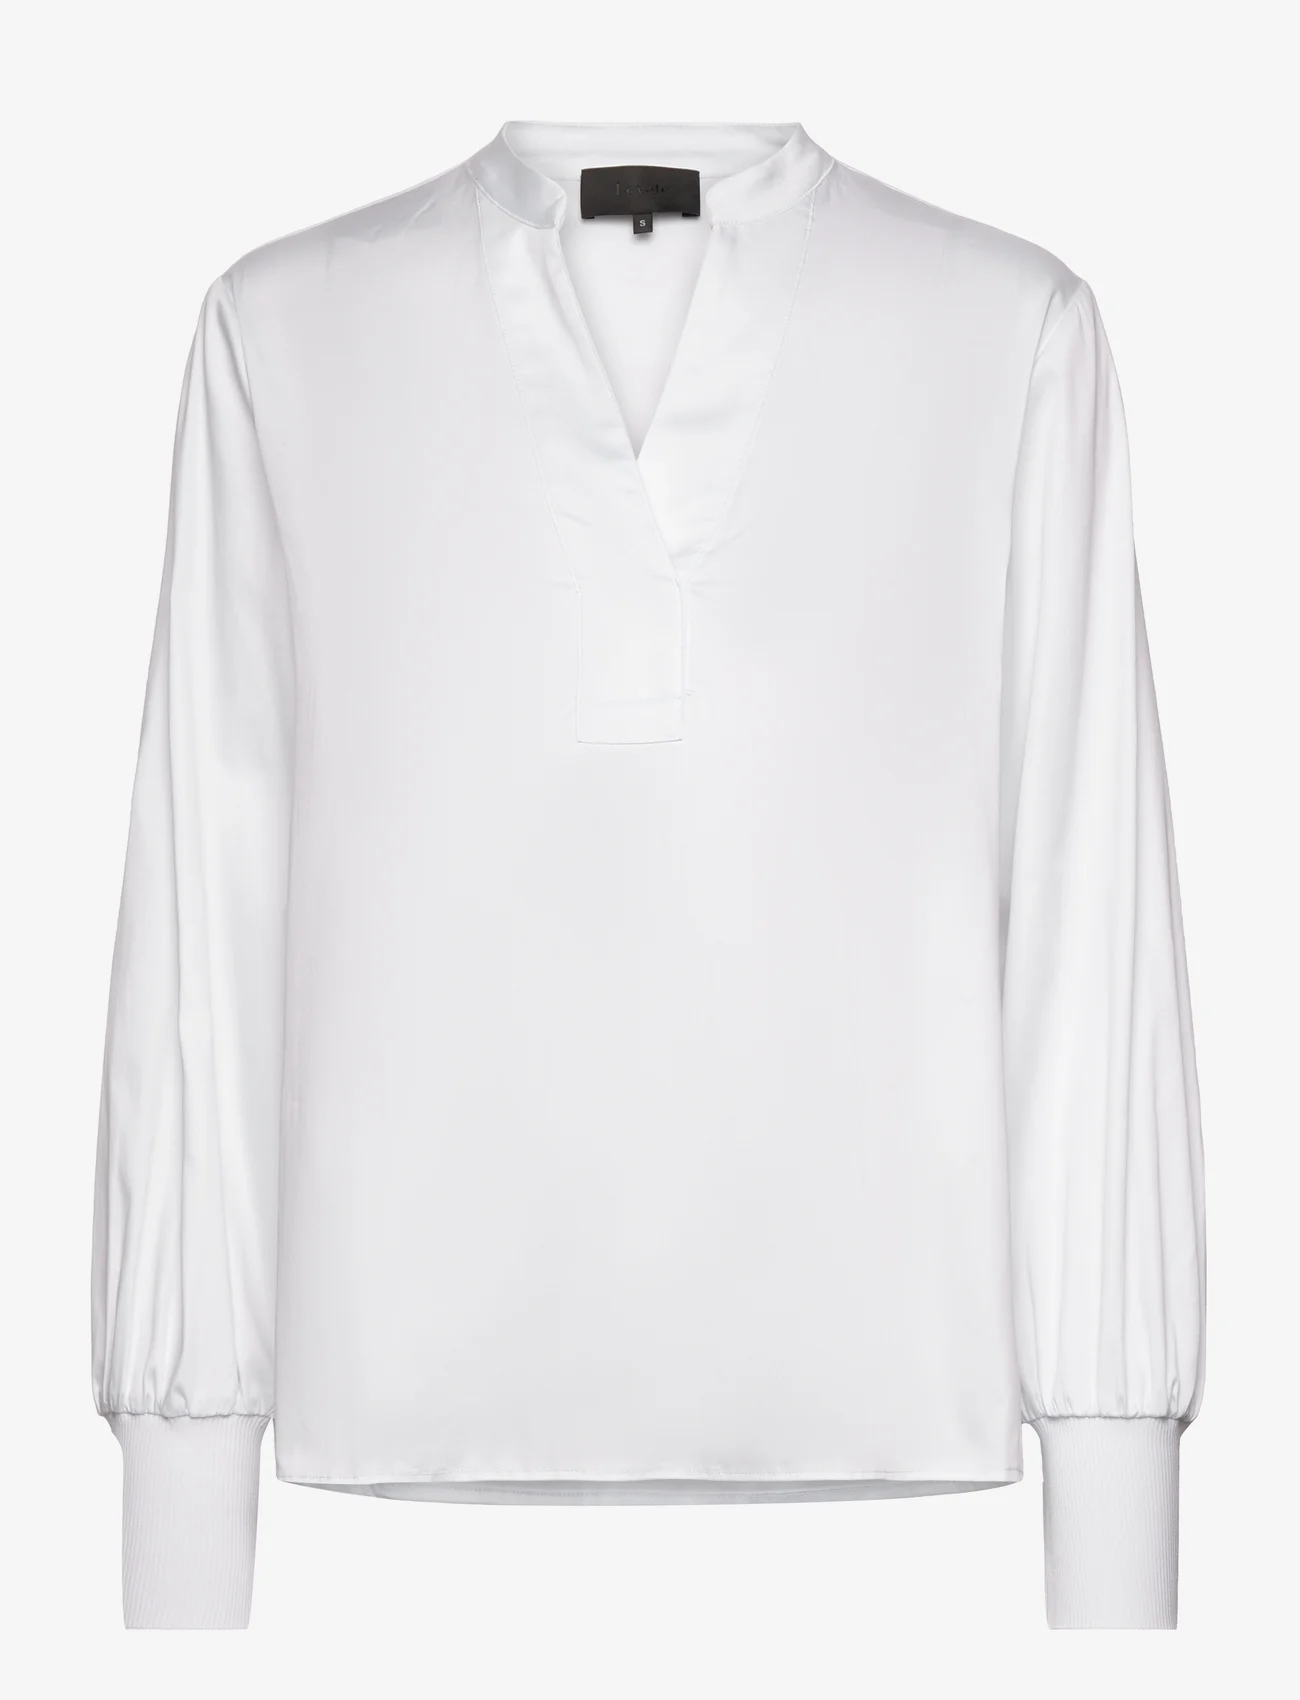 Levete Room - LR-ISLA SOLID - langärmlige hemden - l100 - white - 0